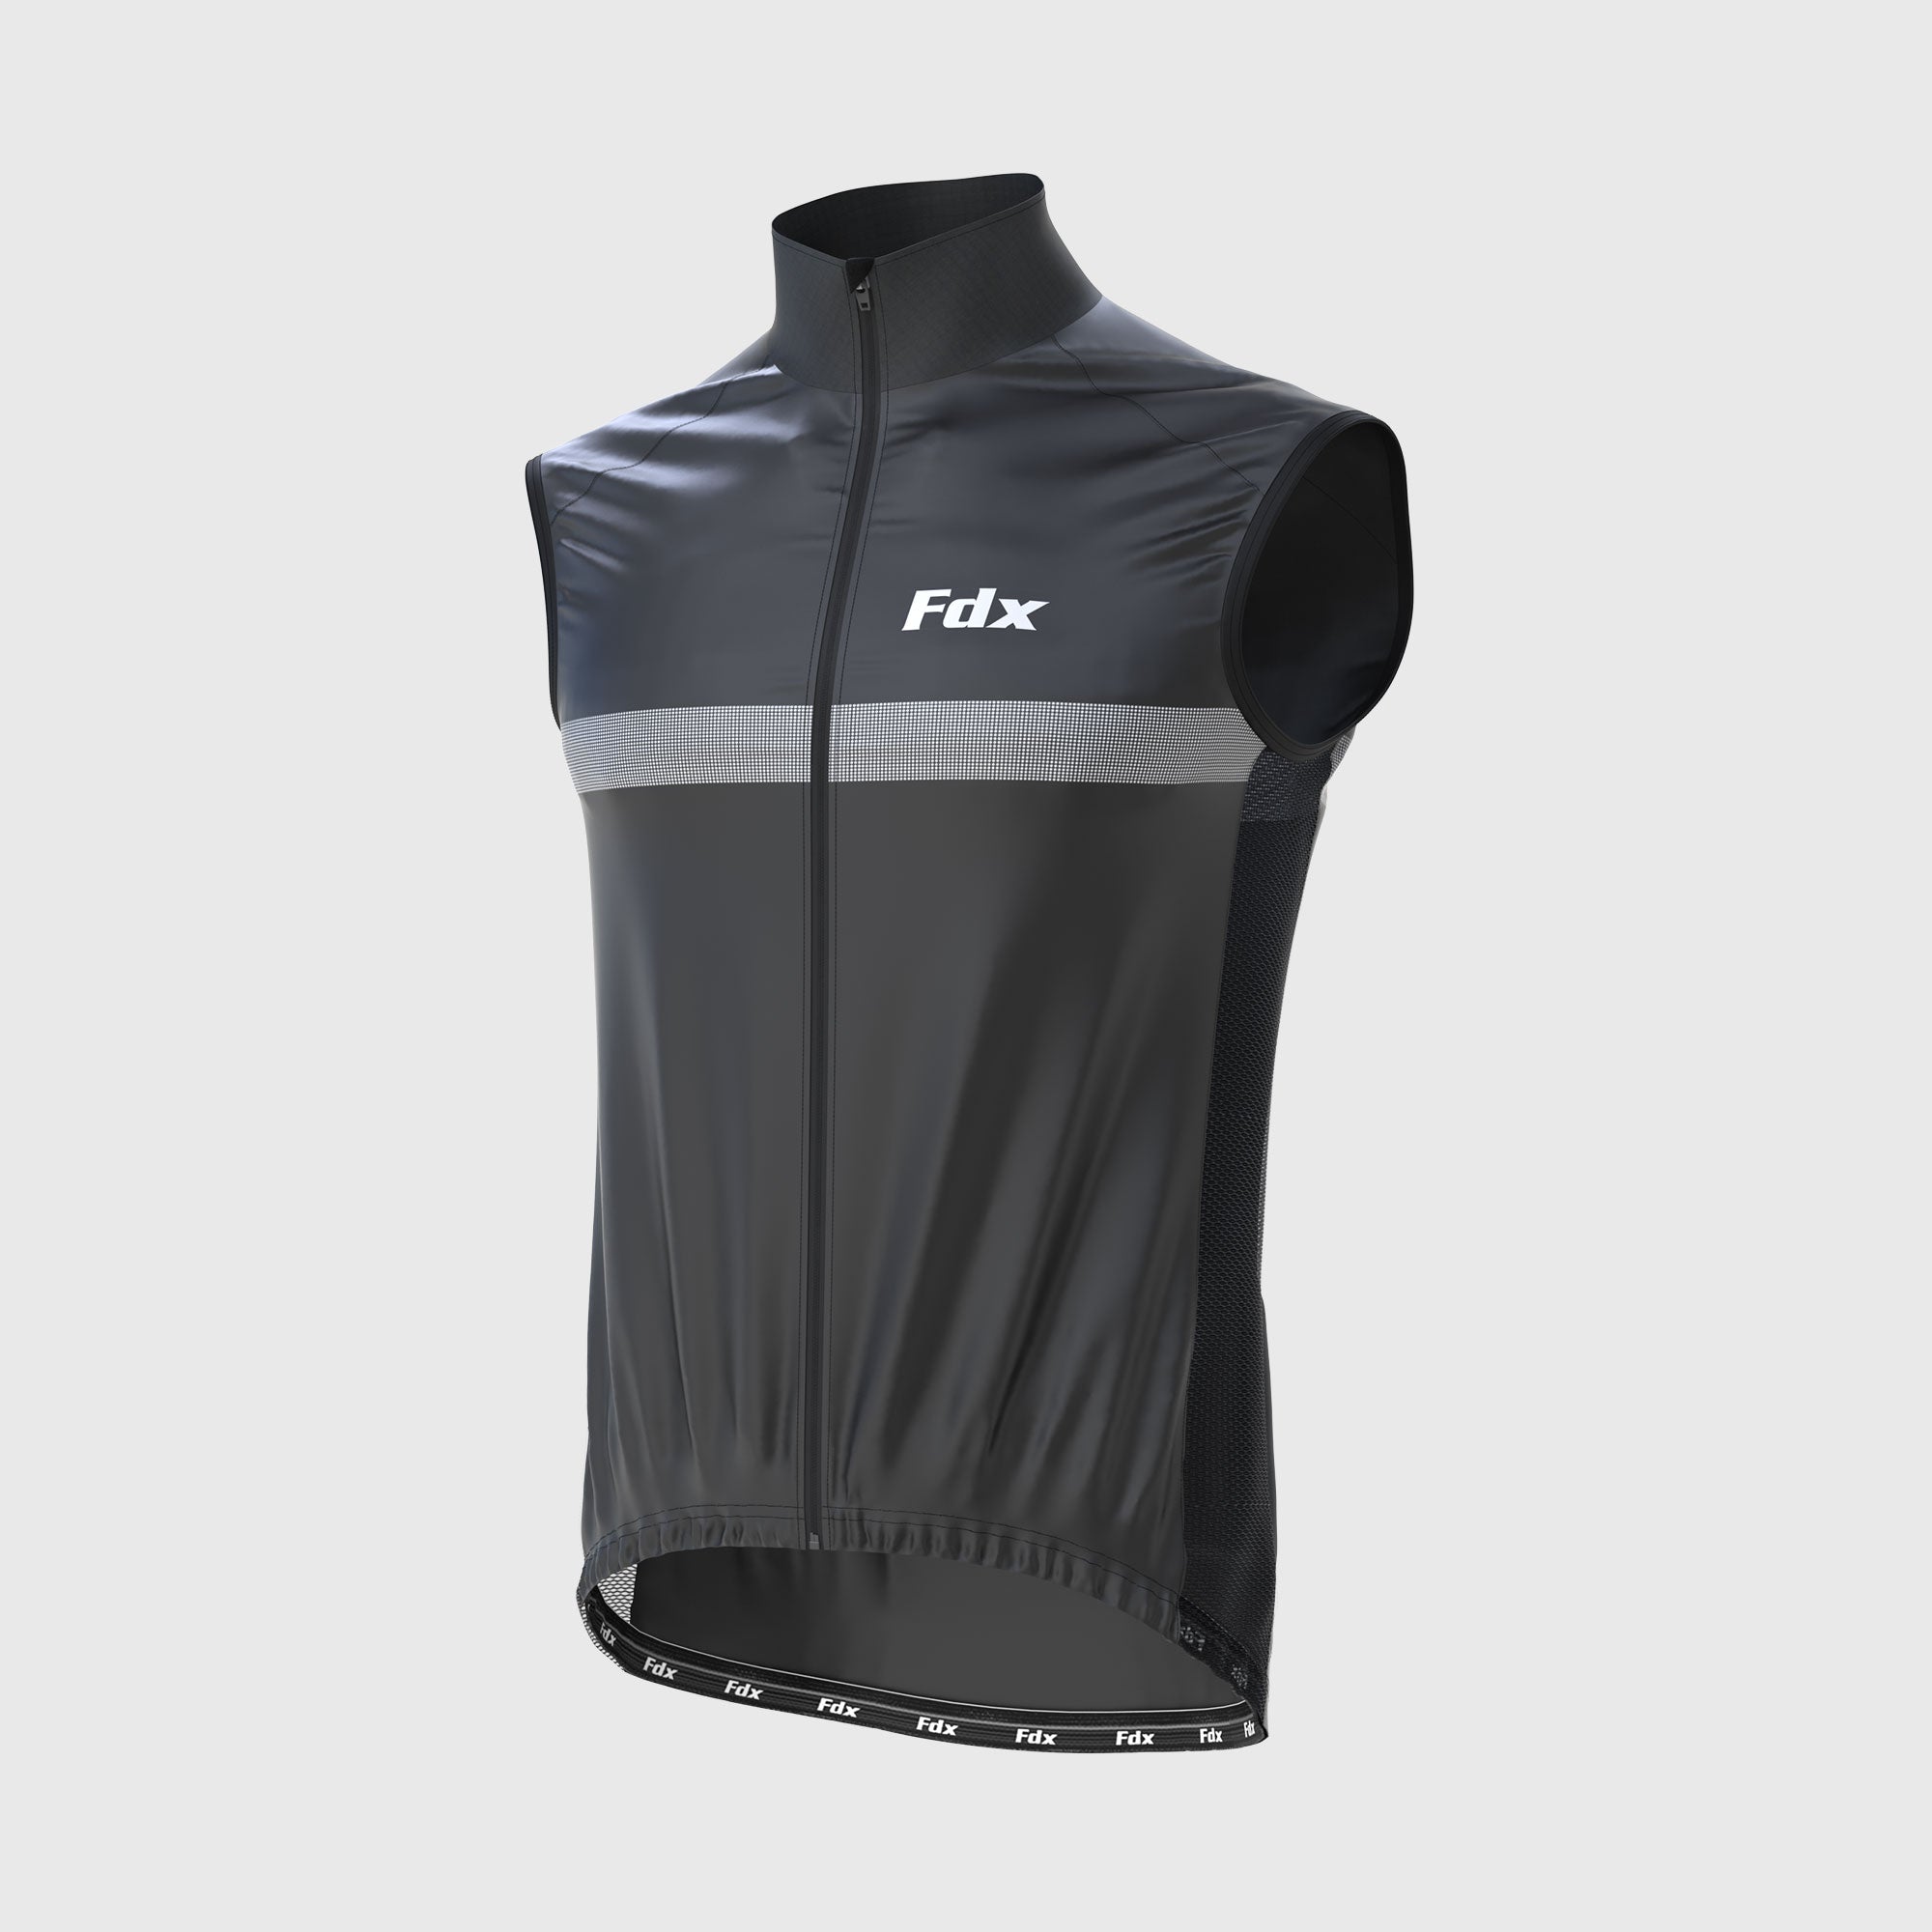 Fdx Black Best Men's Cycling Gilet Sleeveless Vest for Winter Clothing 360° Reflective, Lightweight, Windproof, Waterproof & Pockets